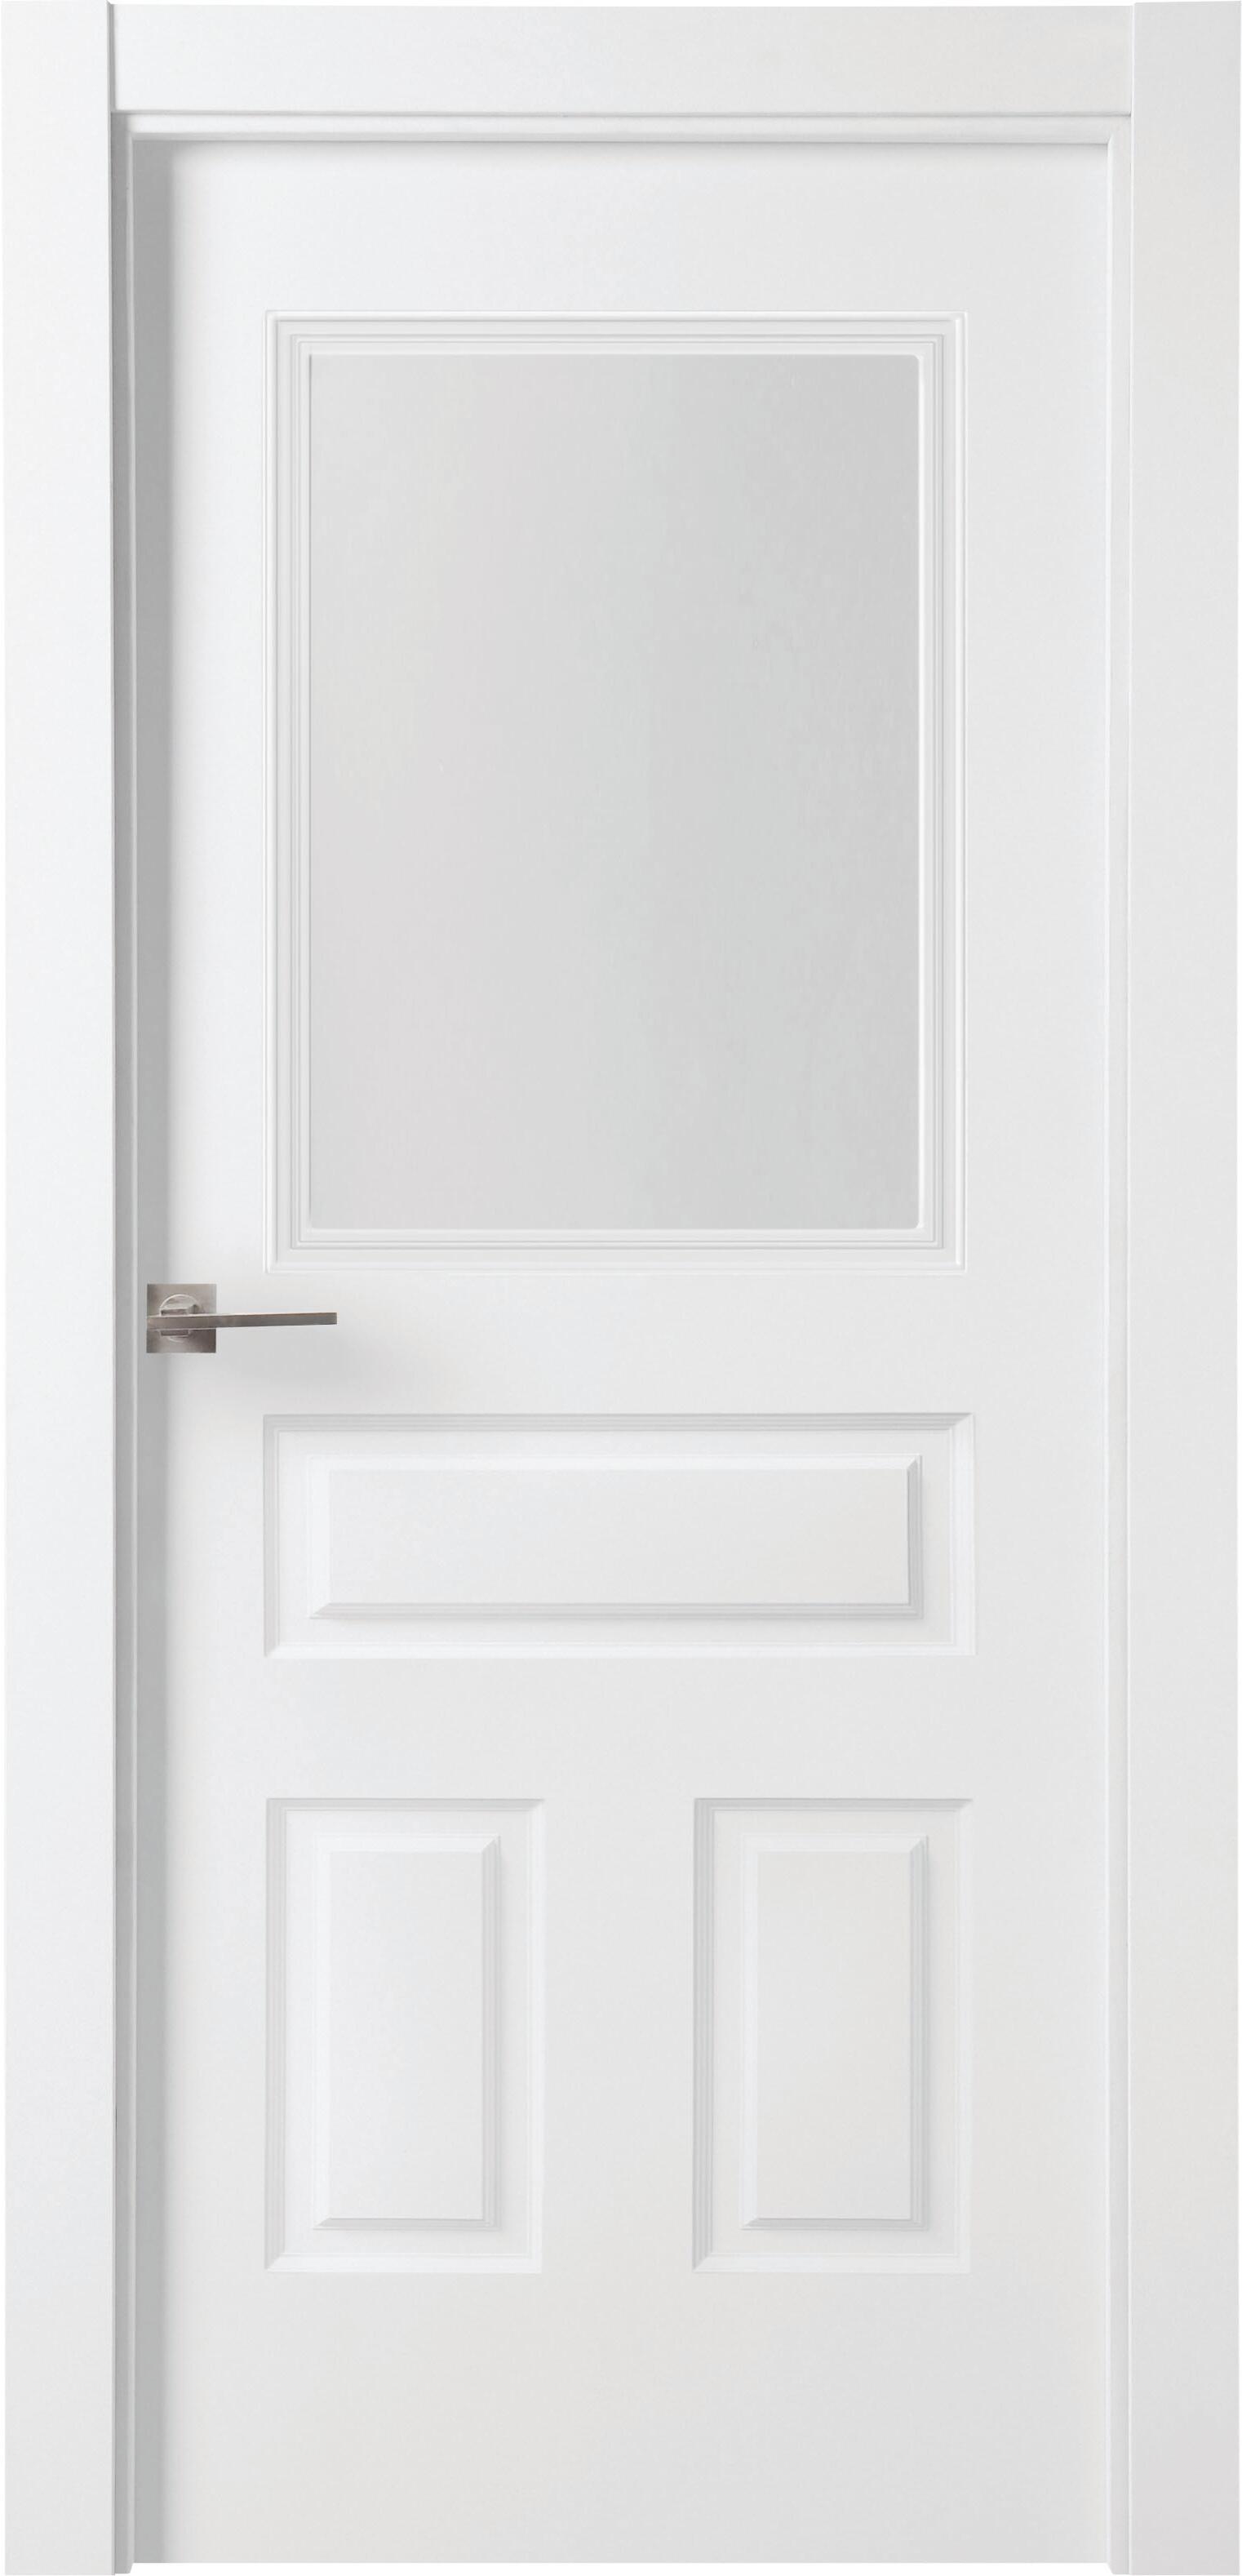 Puerta indiana plus blanco apertura derecha con cristal 11x82,5cm